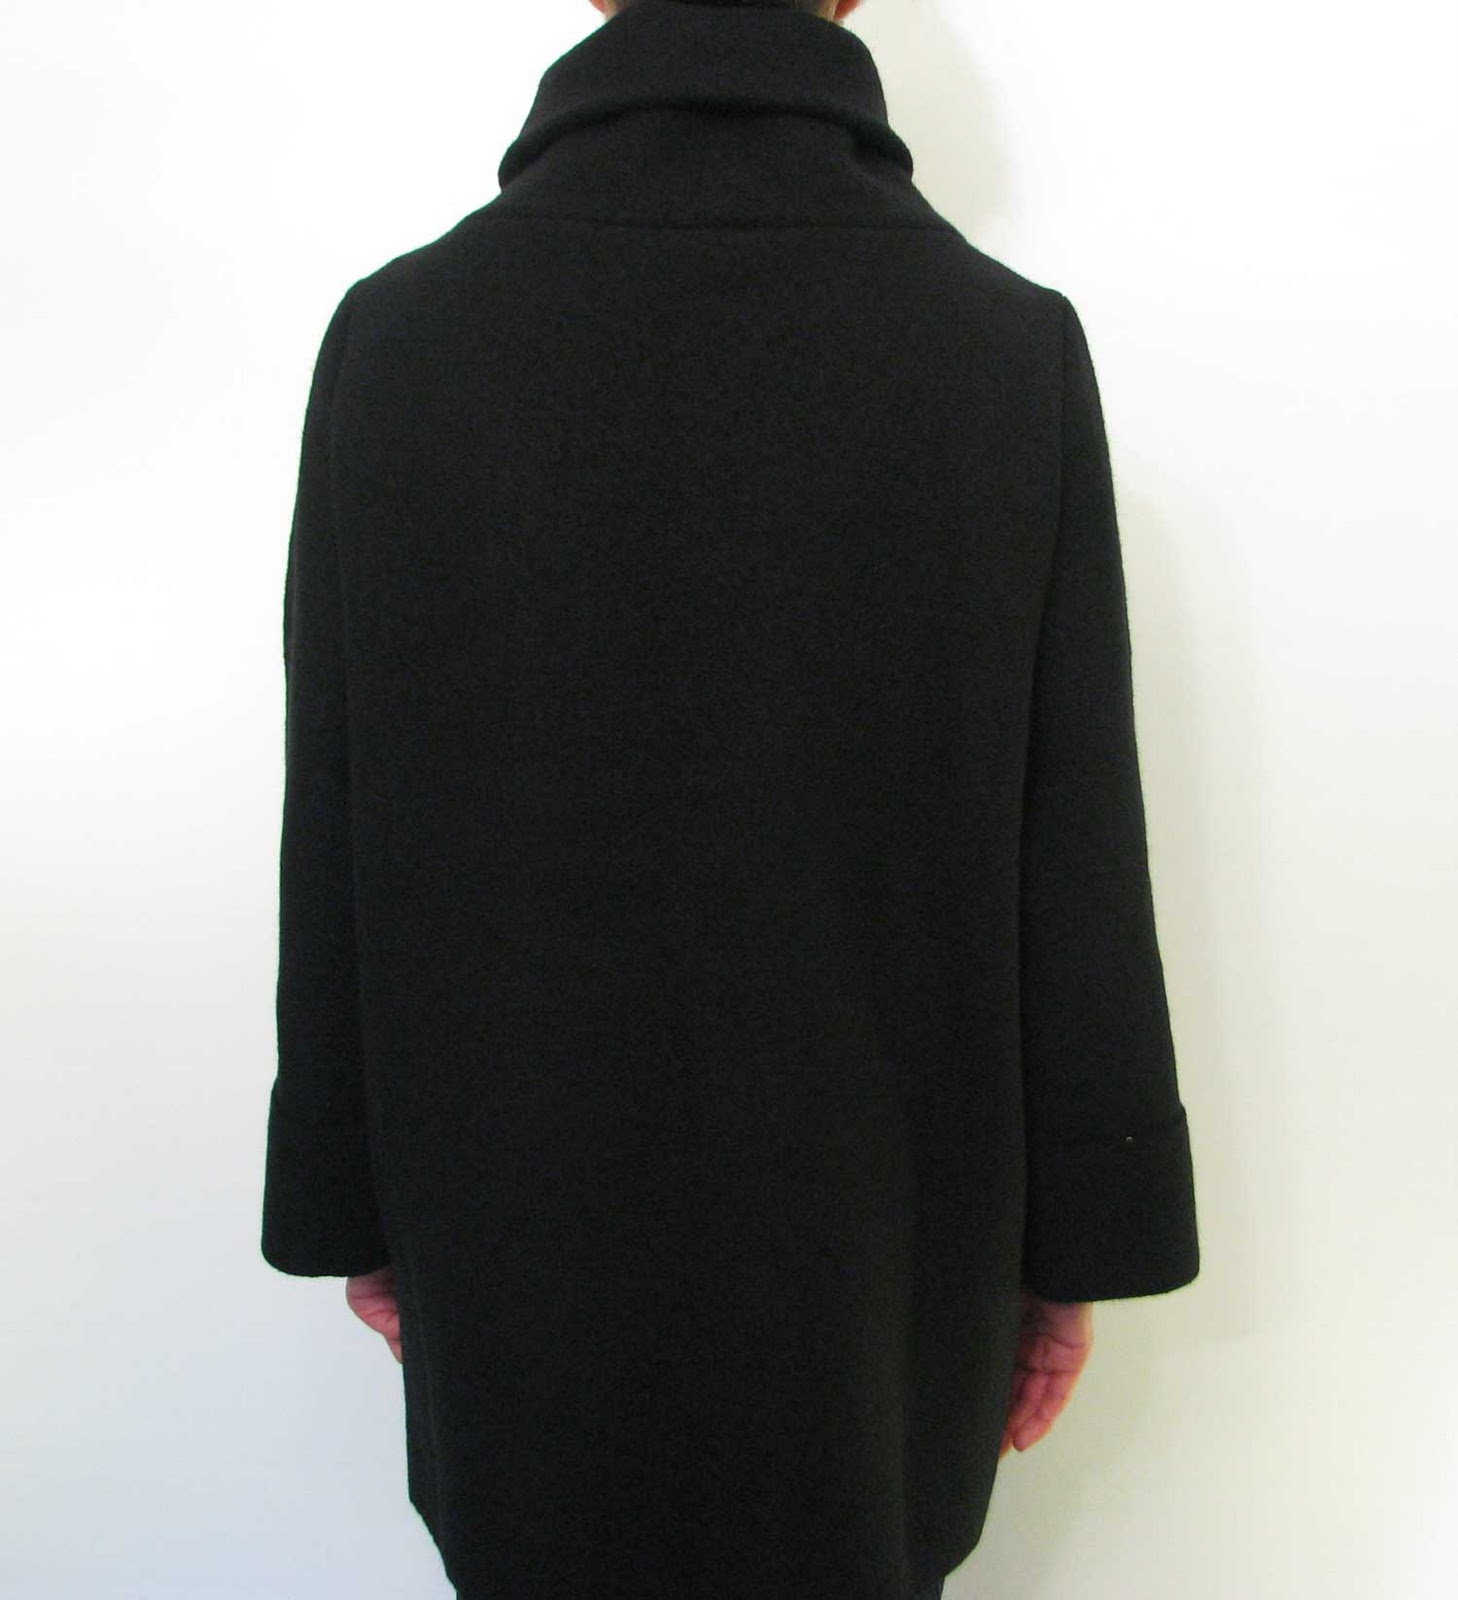 Coat for Women Style 1 Egyptian - Hijab Trade Fashion